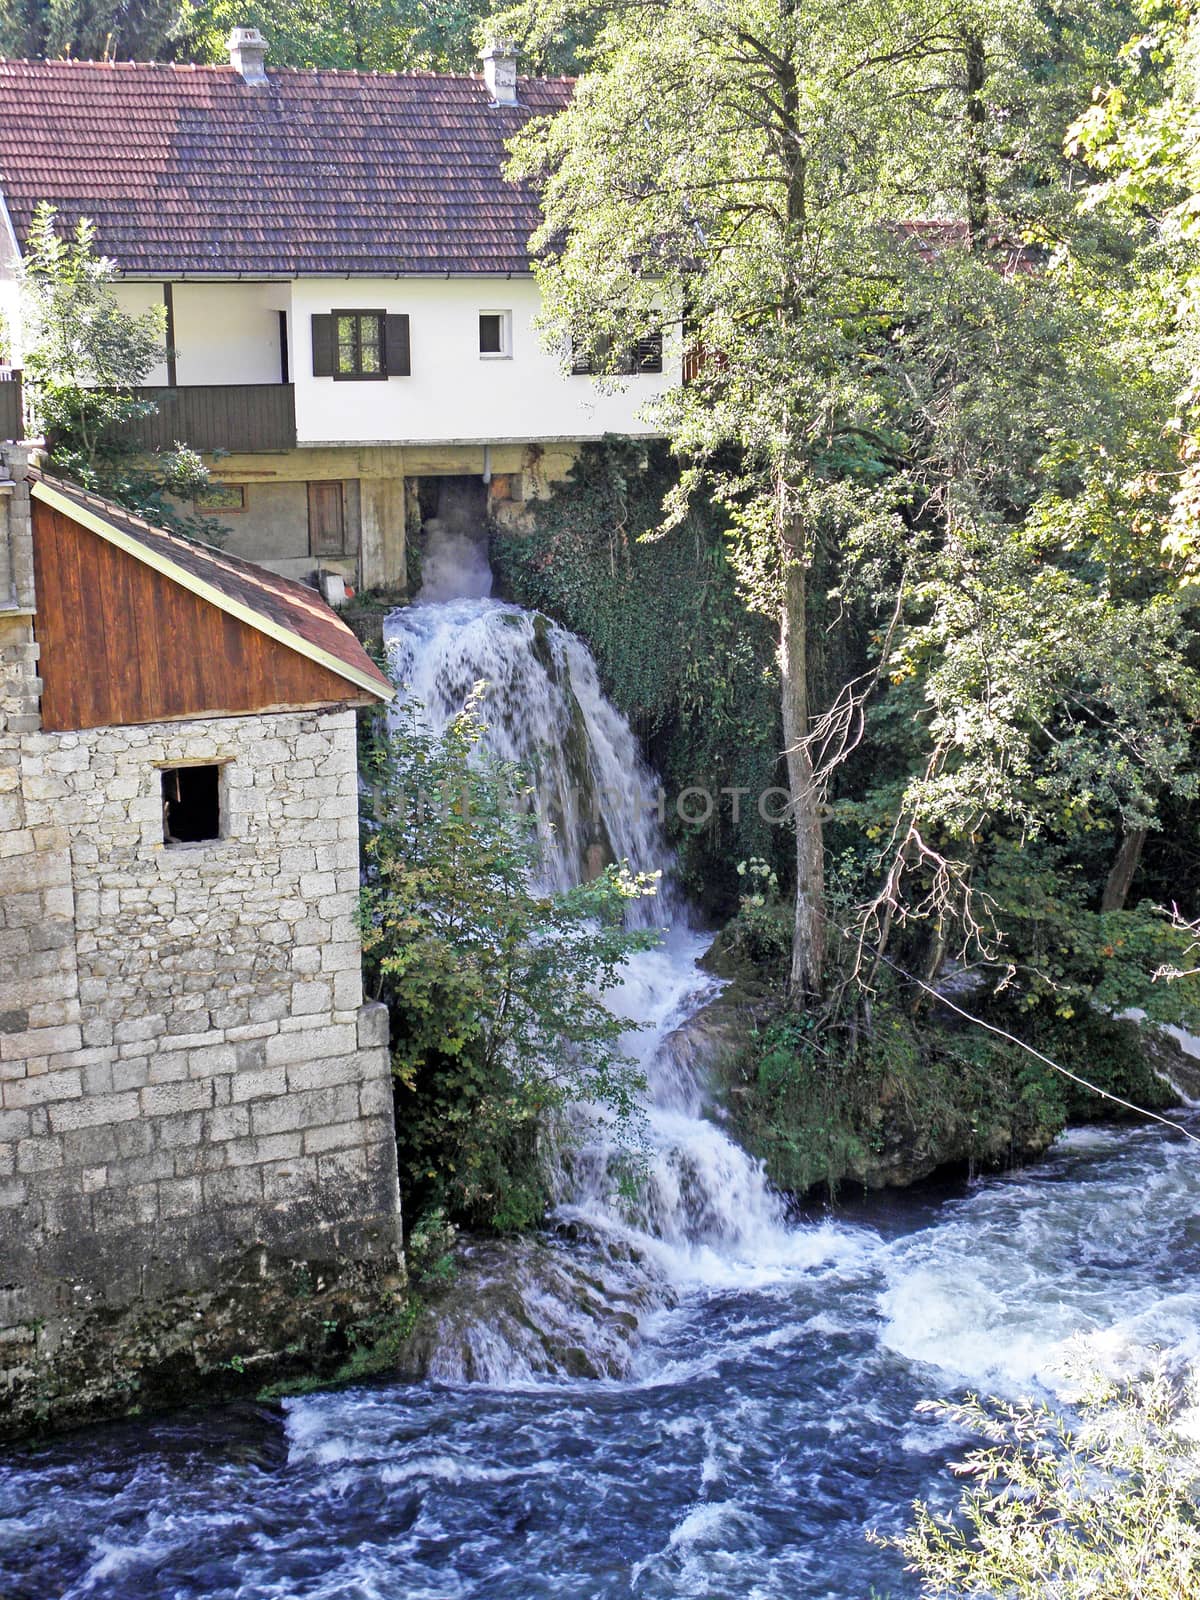 Rastoke,village on waterfalls,3 by rajkosimunovic1